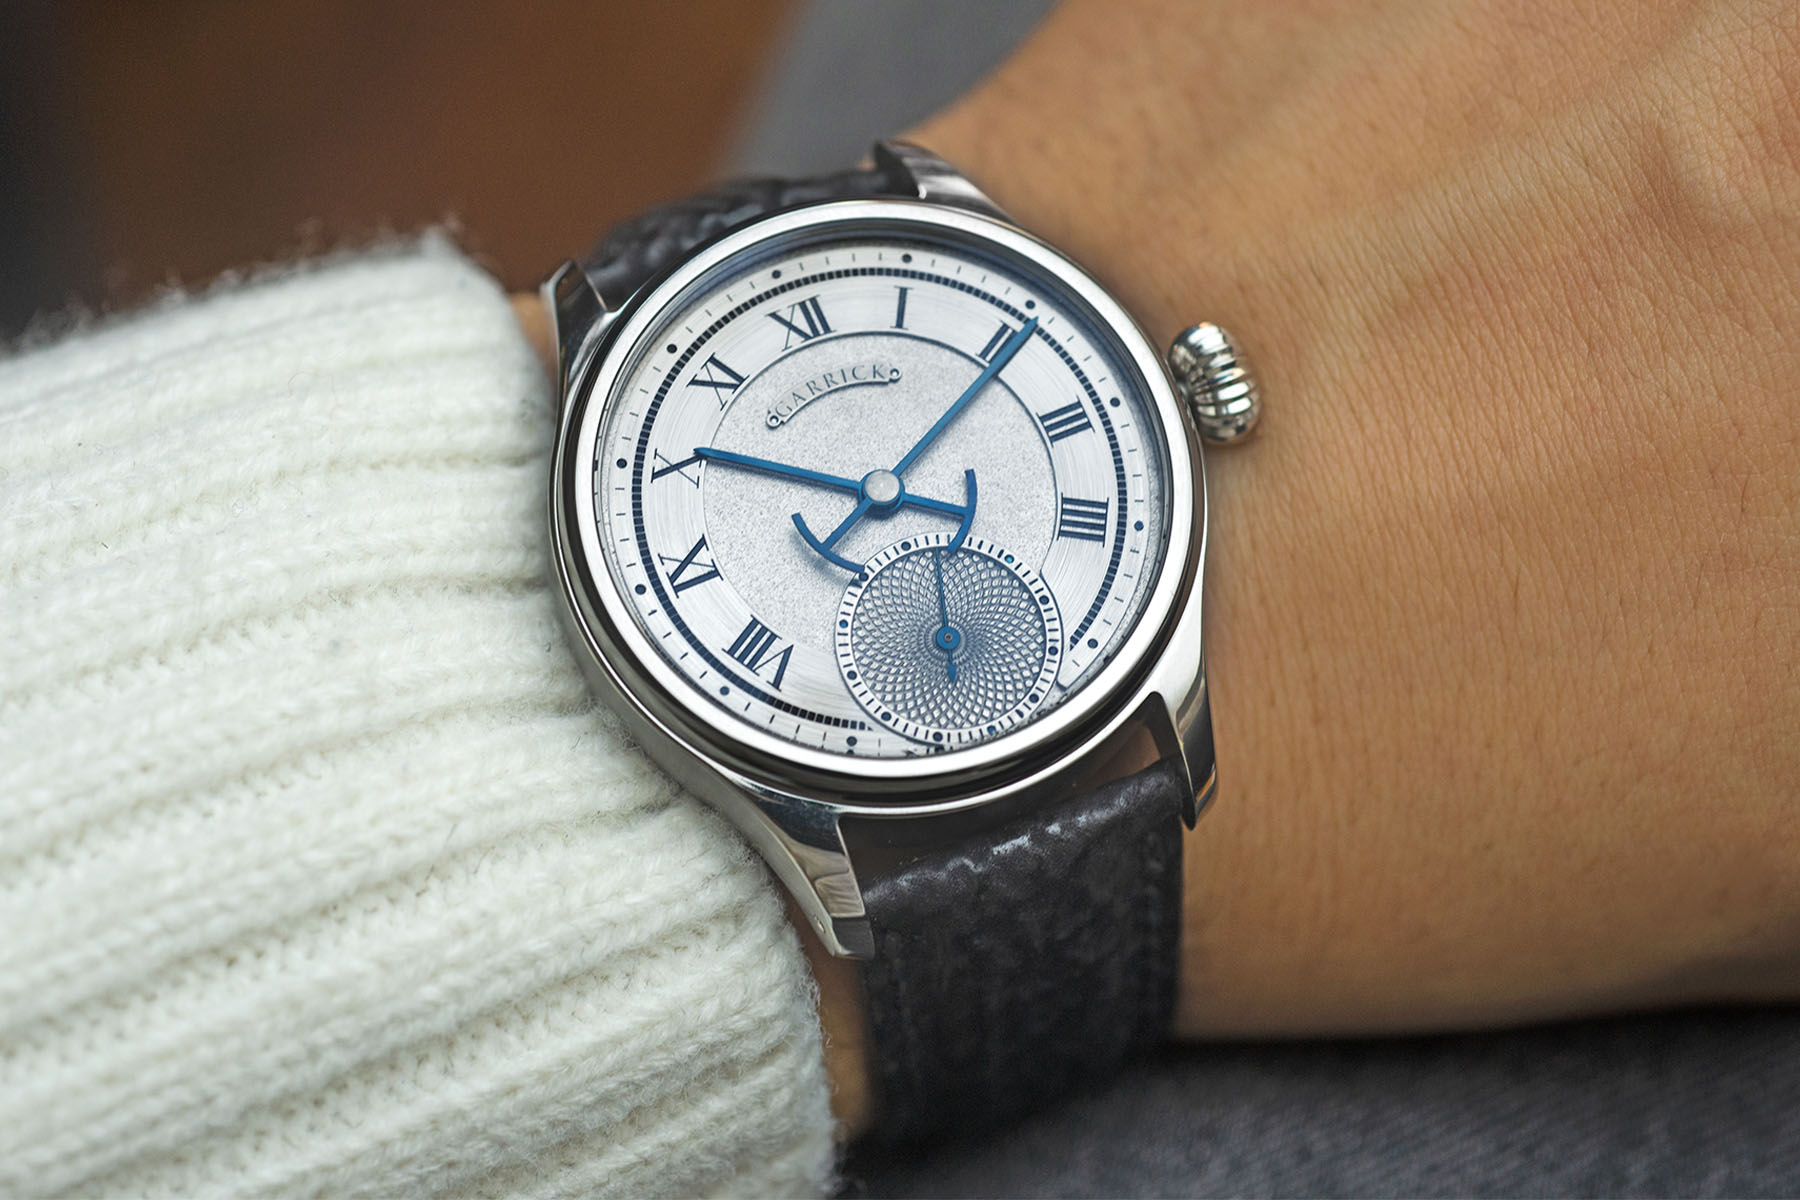 Garrick S4 watch - Independent Watchmaking England